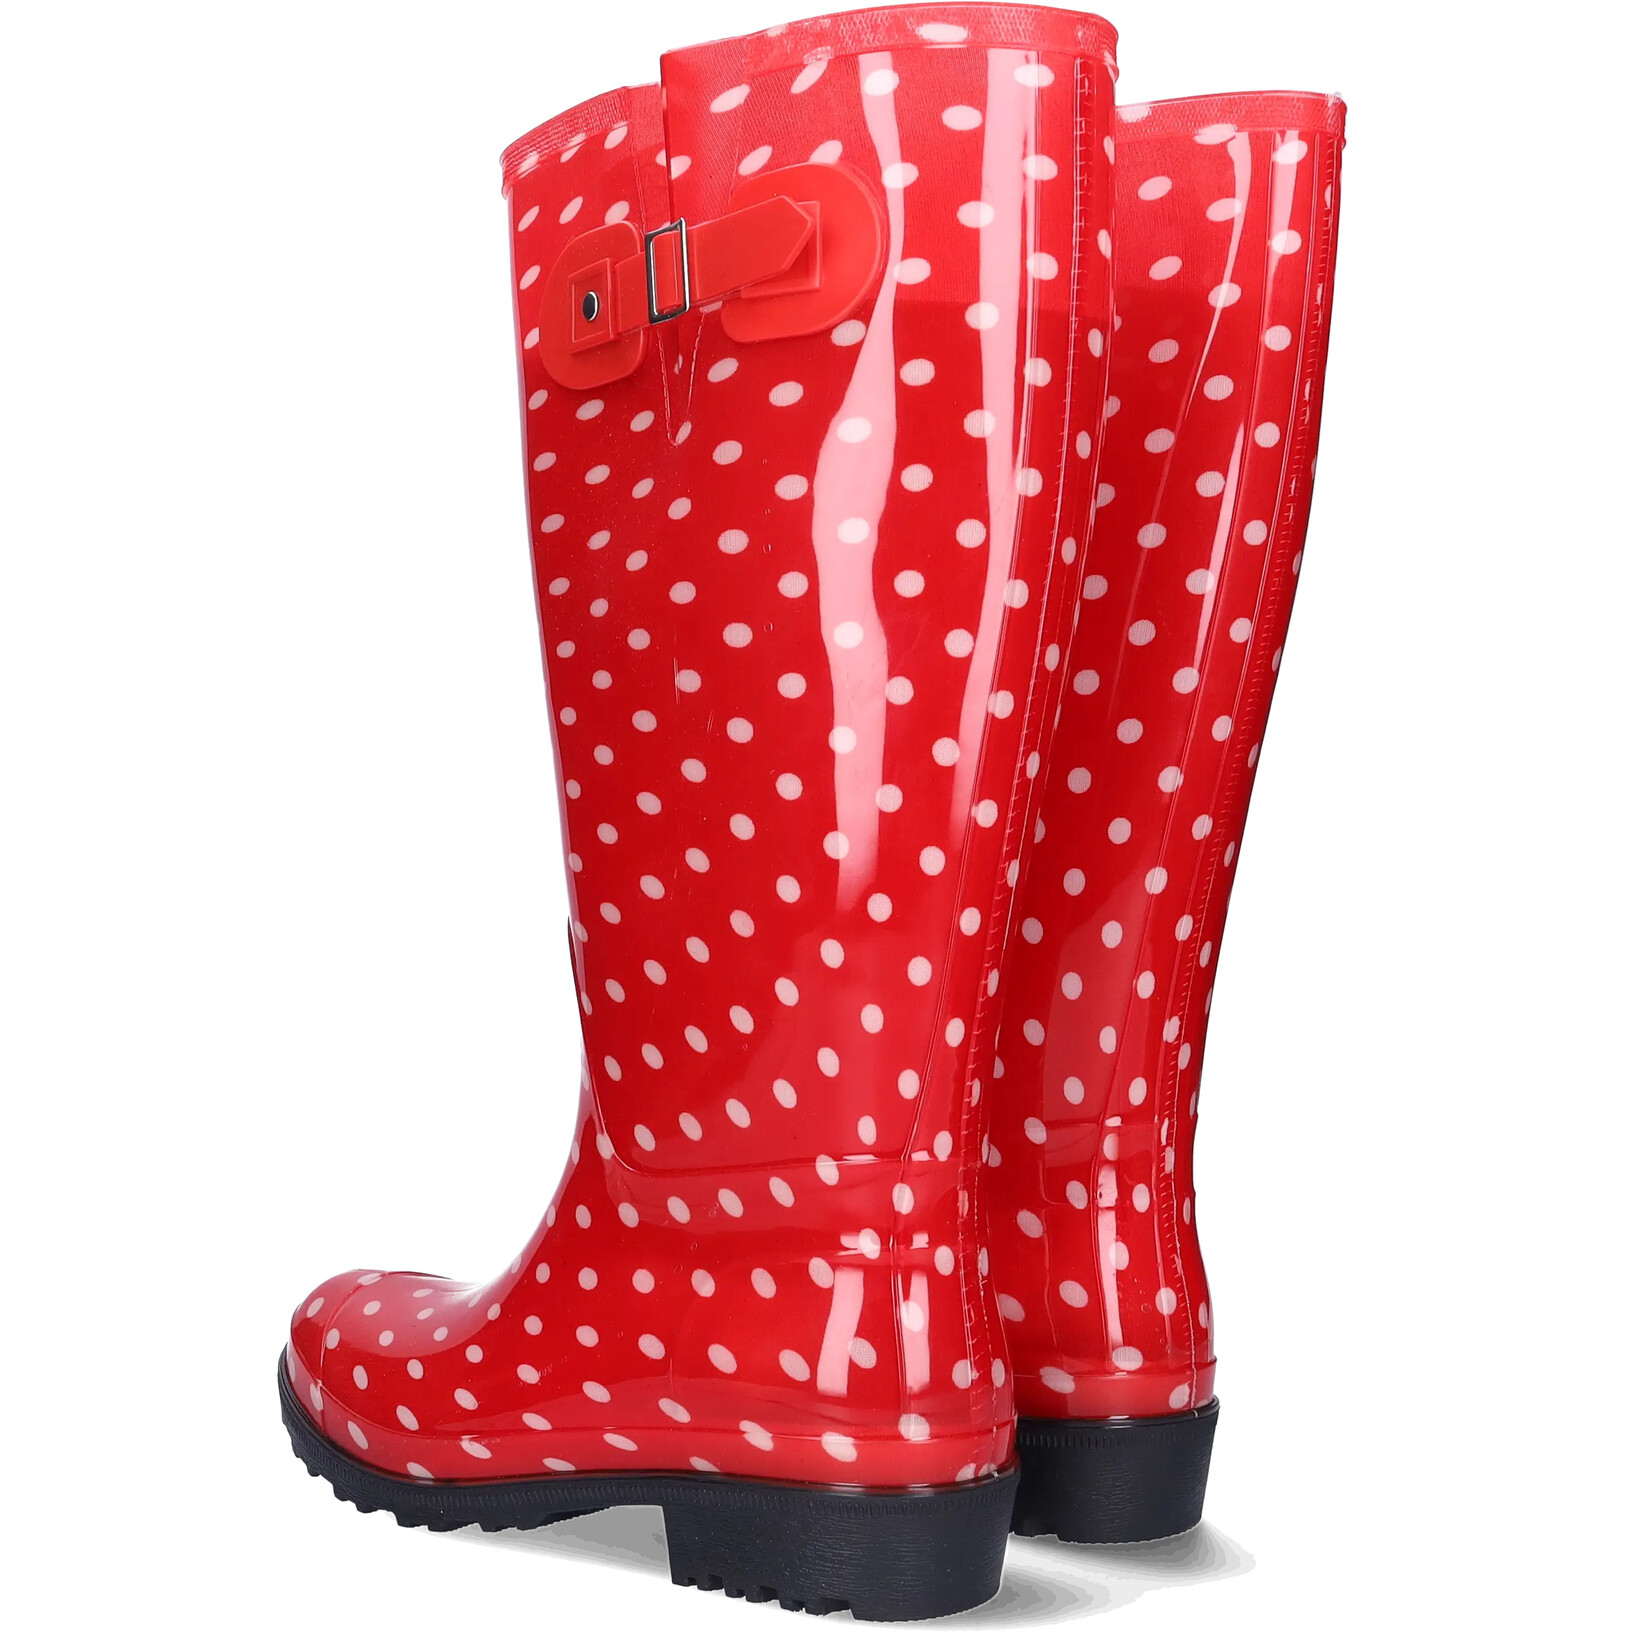 JJ Footwear Wellies - Red/White polka dots